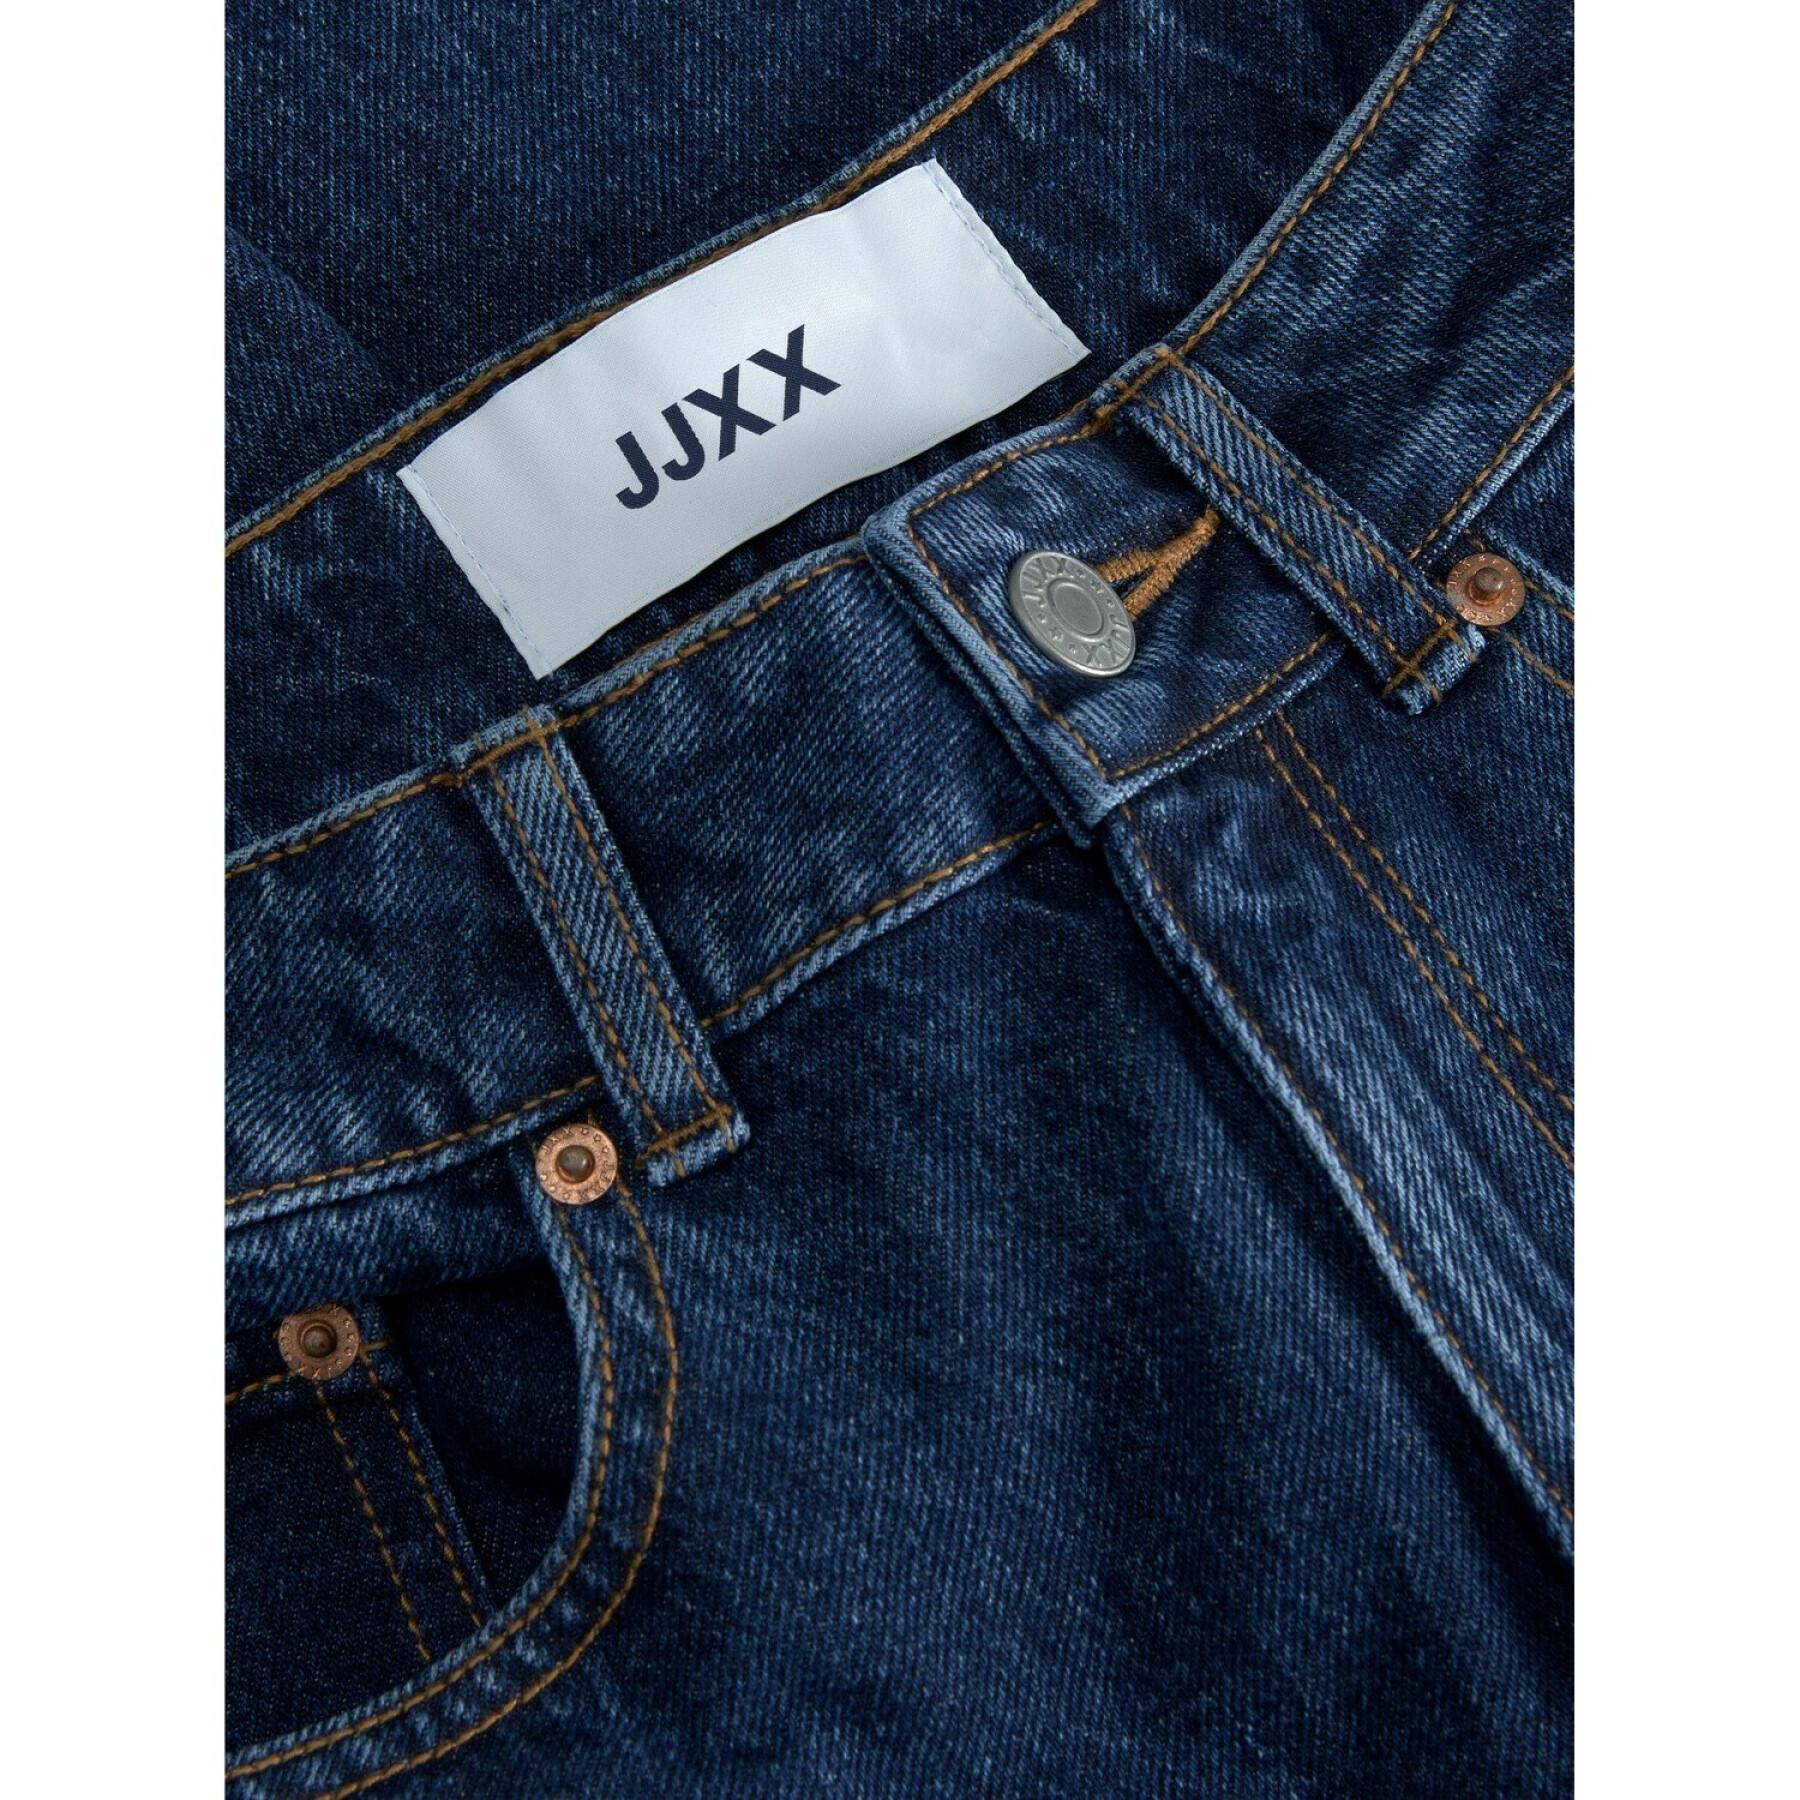 Jeans da donna JJXX lisbon mom nr4001